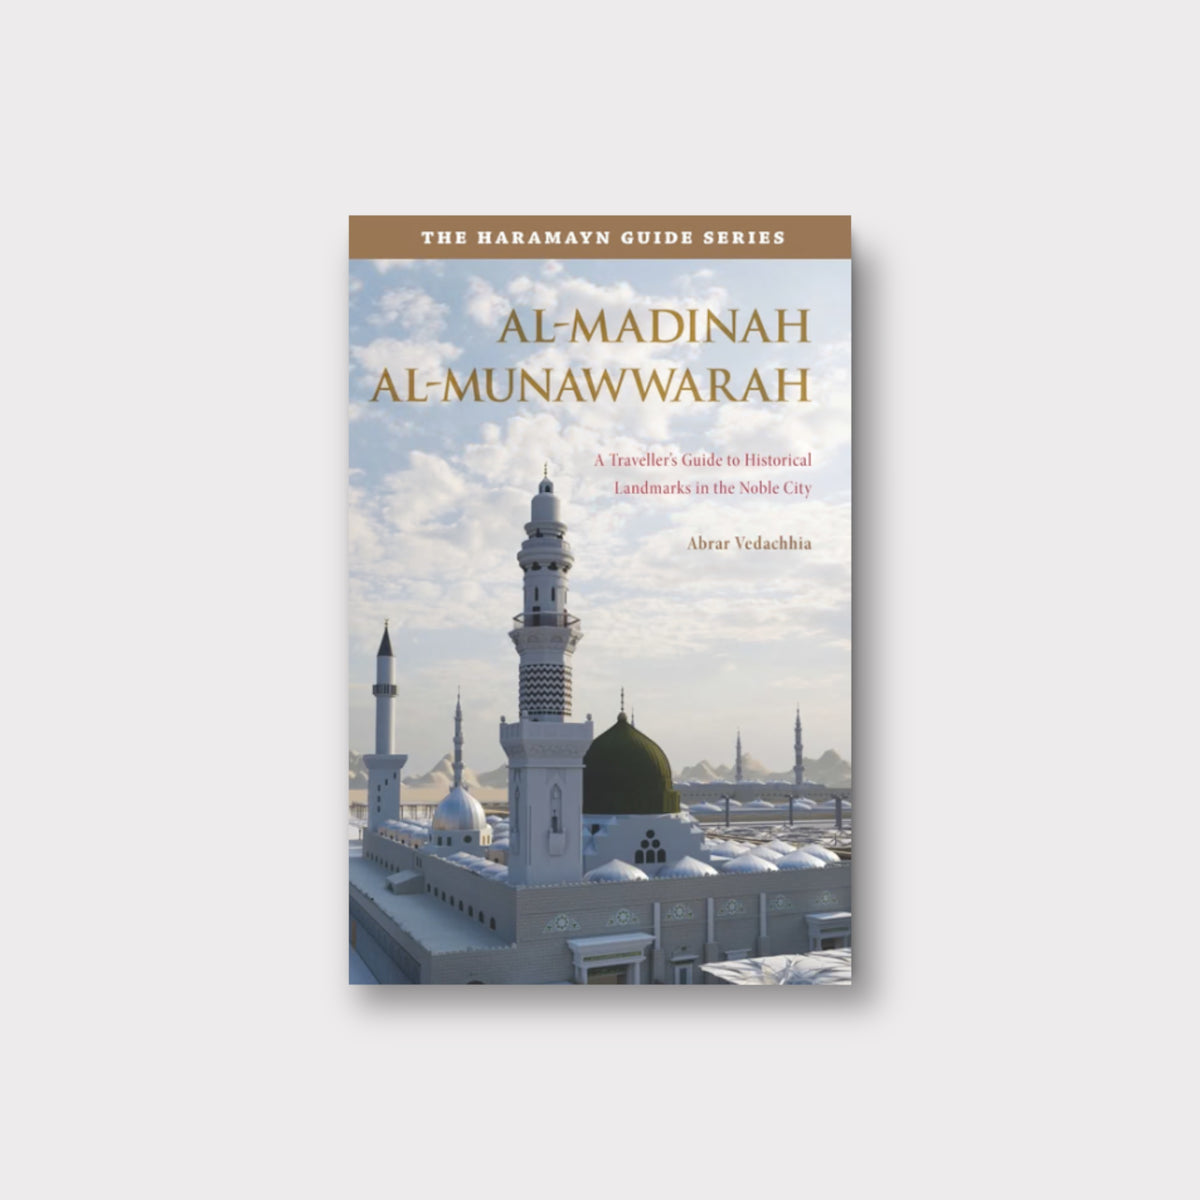 Haramayn Guide Series - Al-Madinah Al-Munawwarah